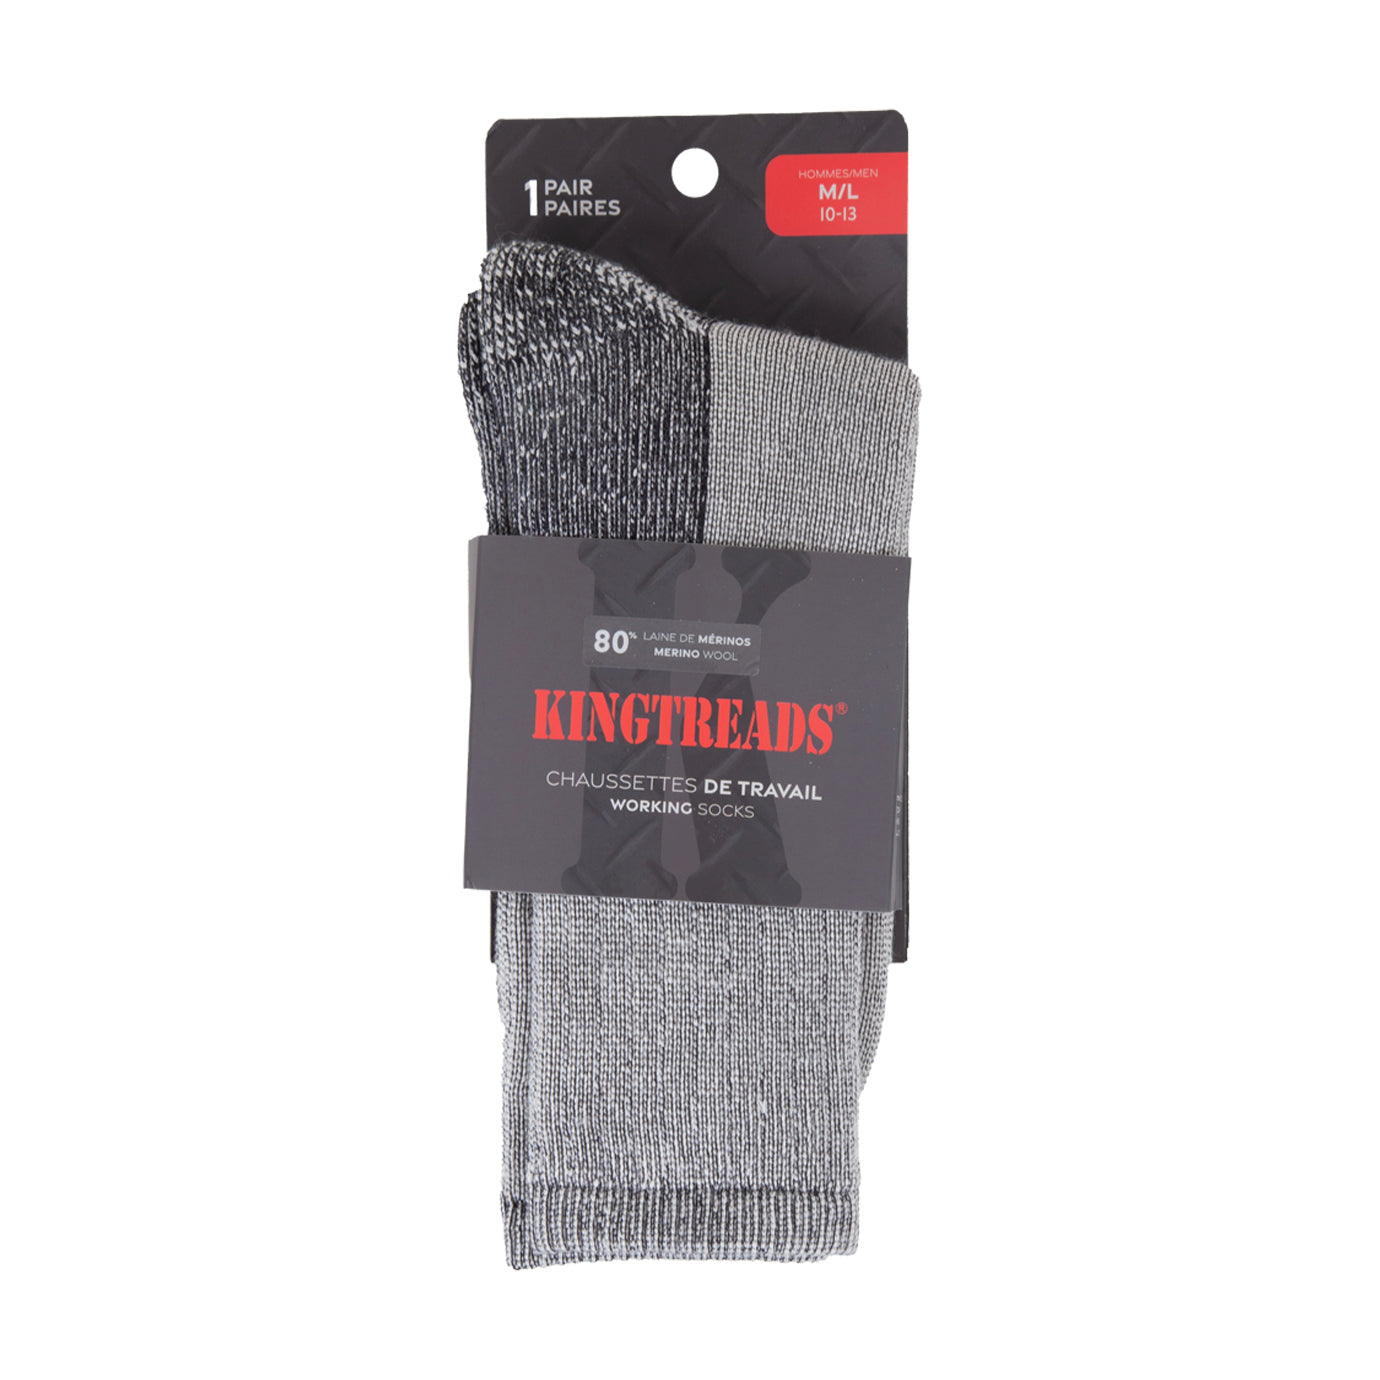 Unisex grey and black PERFORMANCE work socks (2 options)